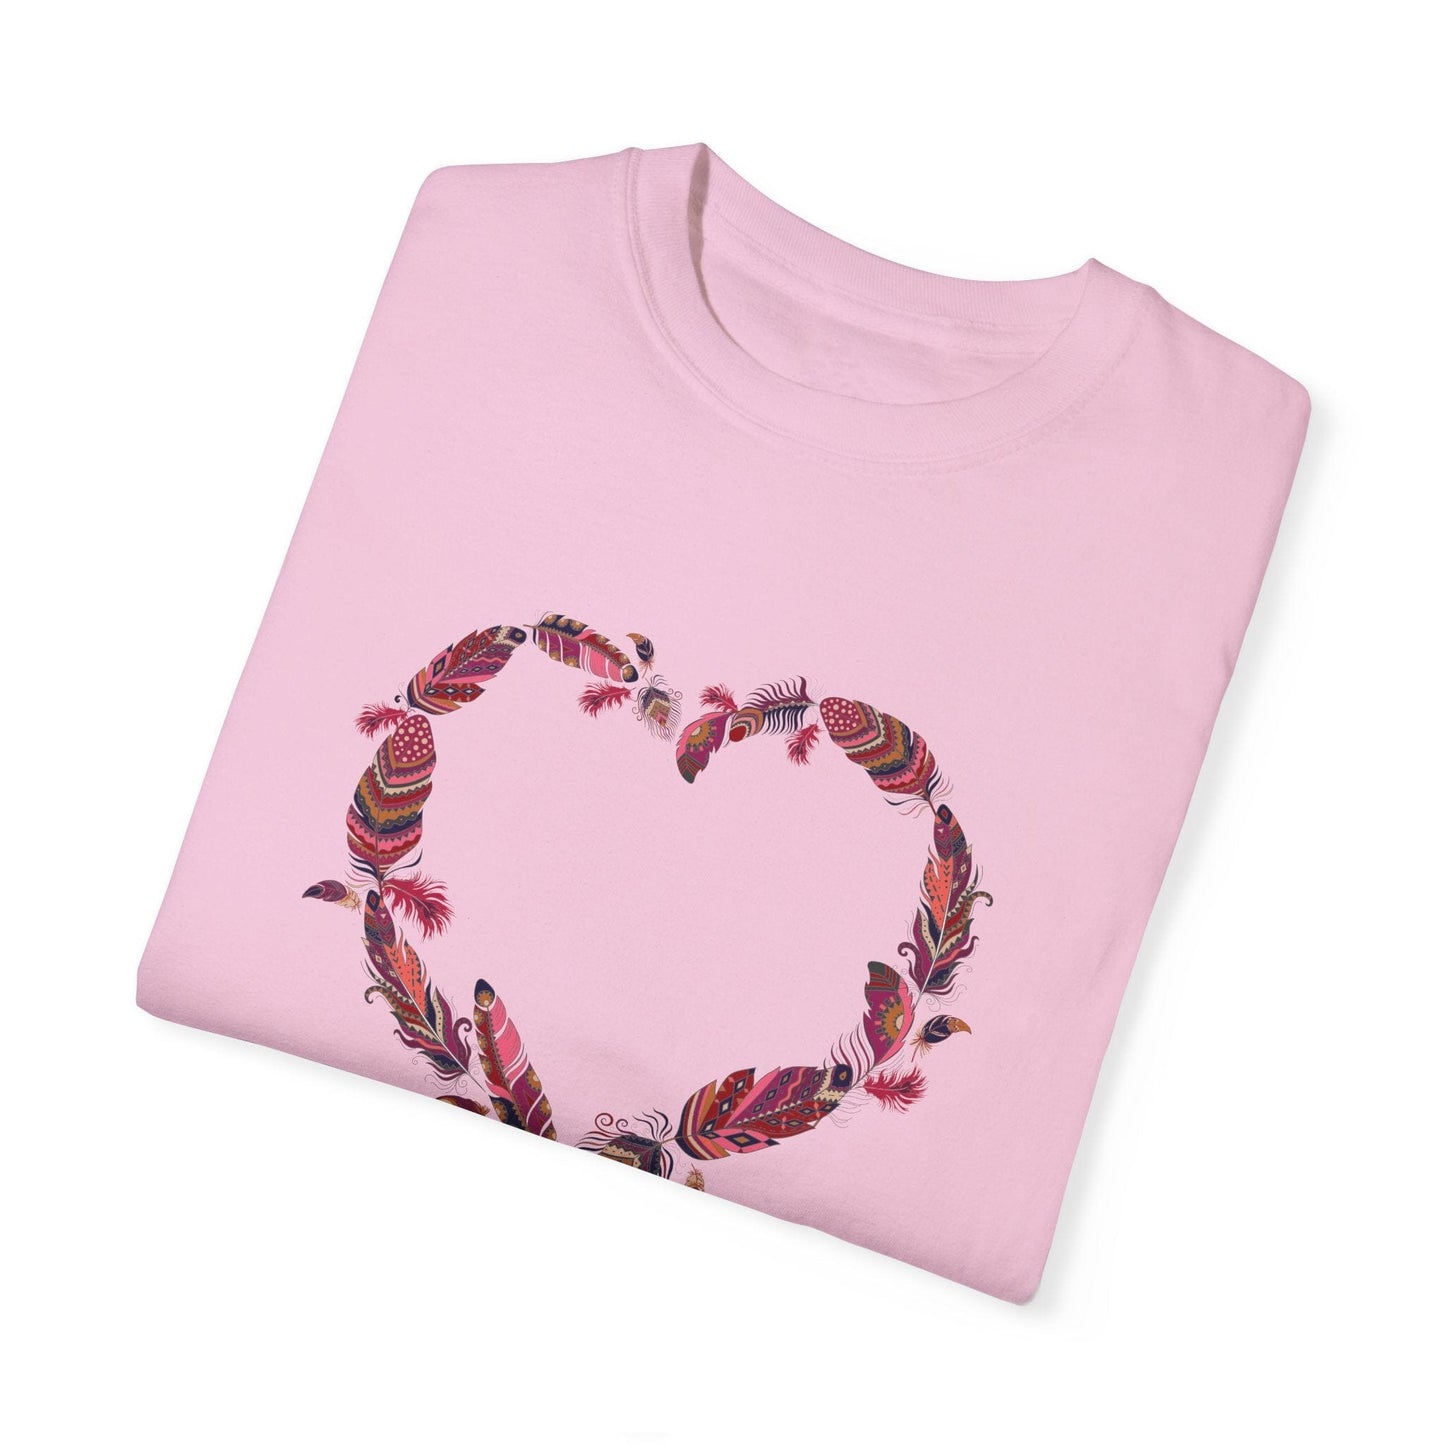 Flowers Tshirt, Boho Feathers Tshirt, Boho Valentine's Day Heart Shirt, Floral Nature Shirt, Art Nouveau Art Deco Shirt, Flowers Lover Graphic Tee T-Shirt Printify 